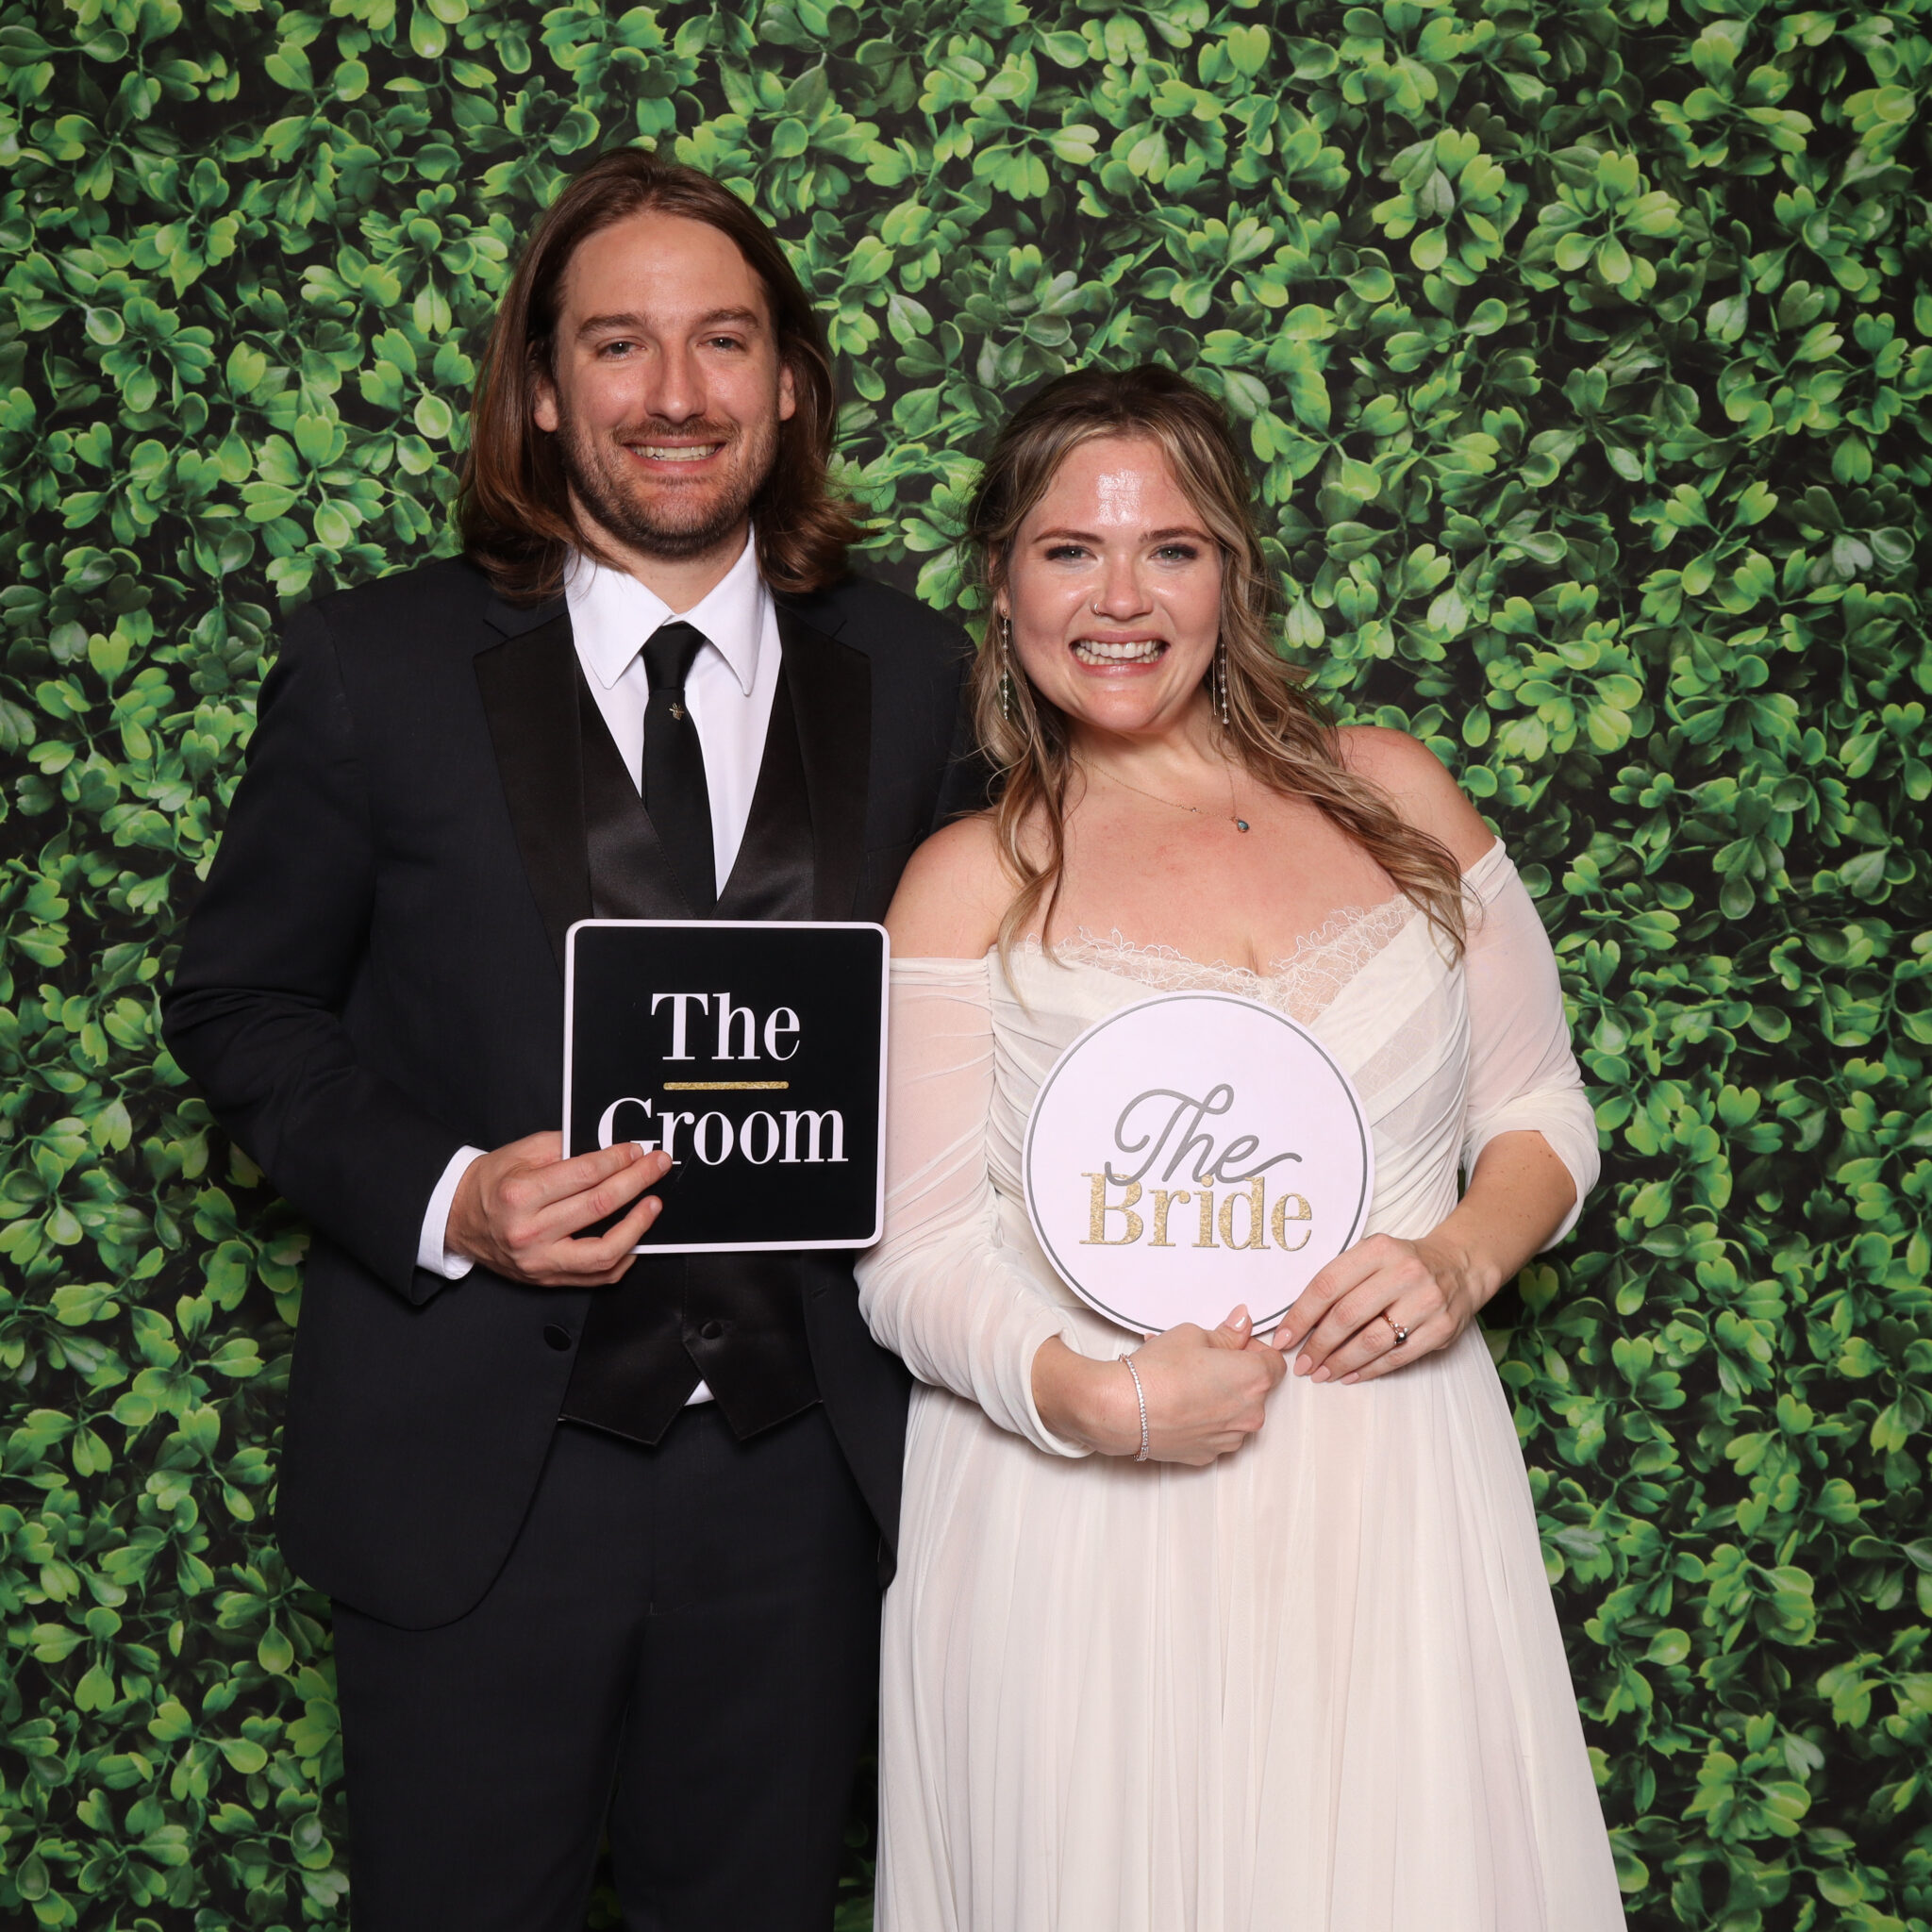 Tampa Photobooth Rental Green Hedge Wall Backdrop Wedding